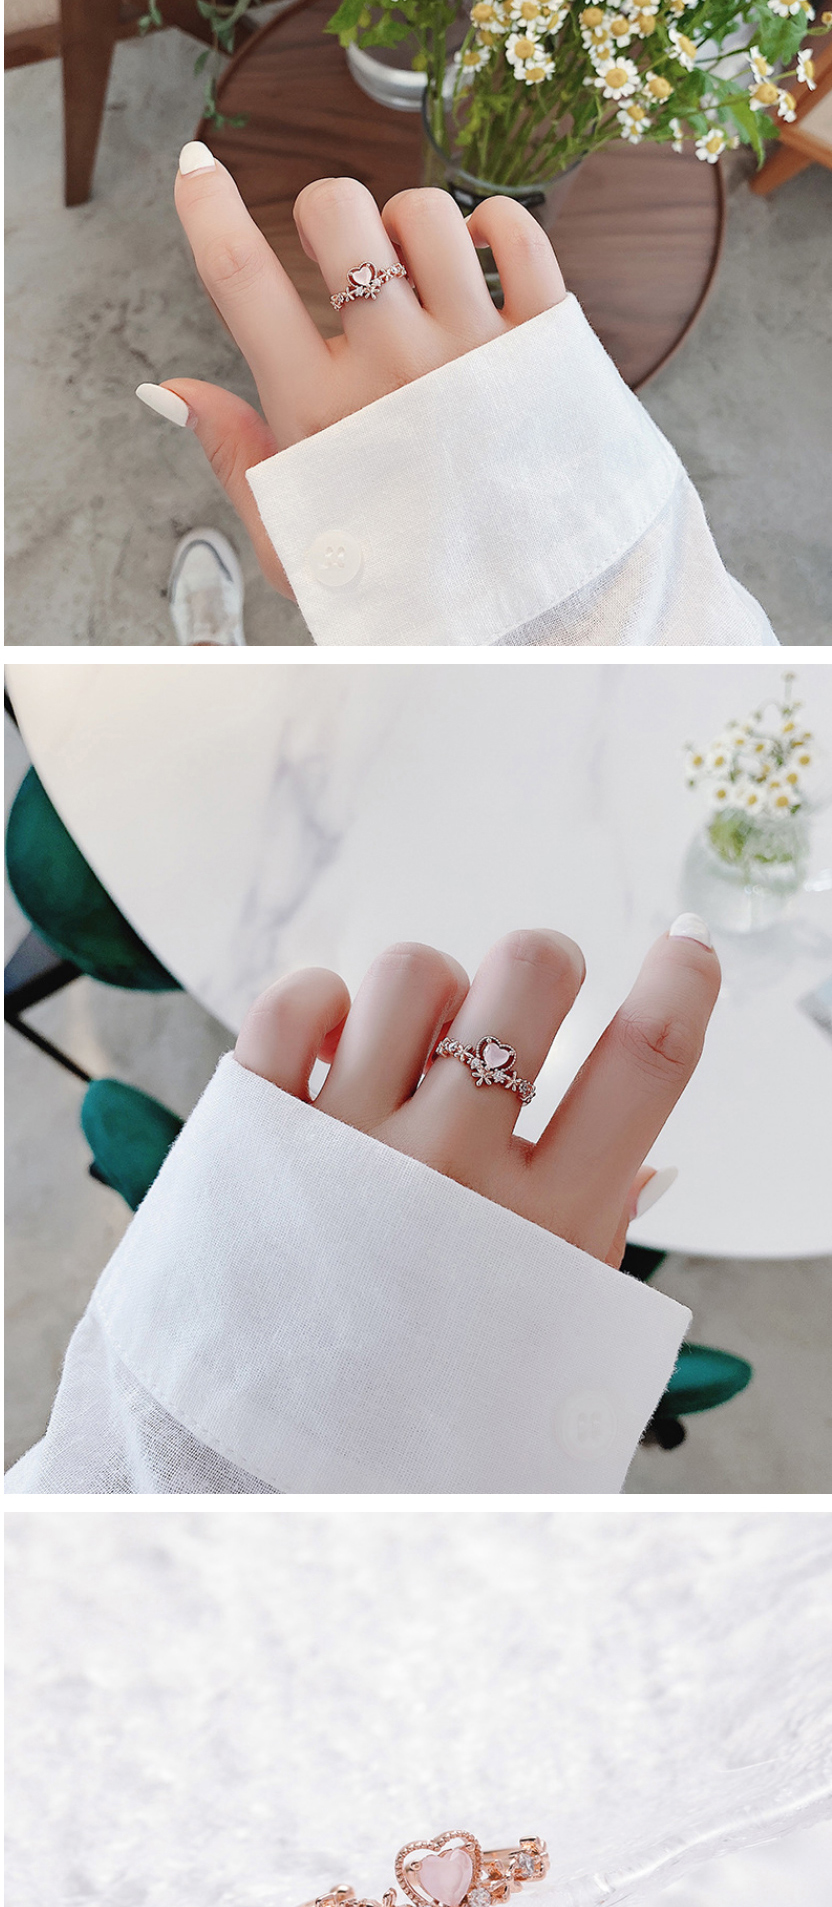 Fashion Love Section Two Sparkling Diamond Zircon Flower Ring,Fashion Rings